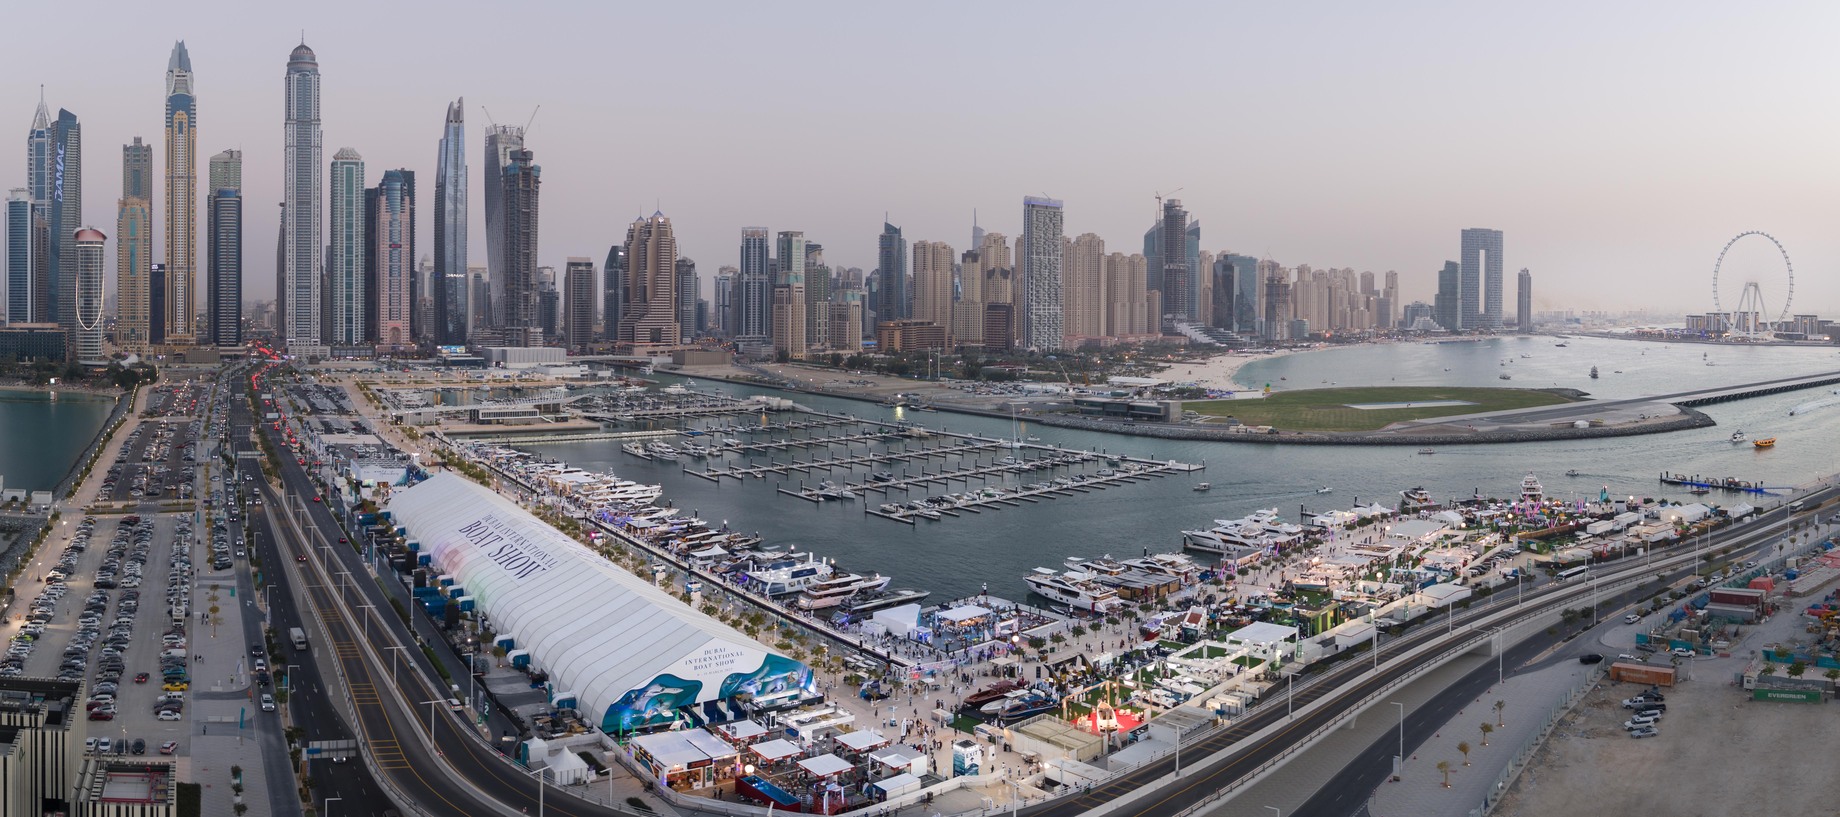 Global brands launch yachts at Dubai International Boat Show 2022